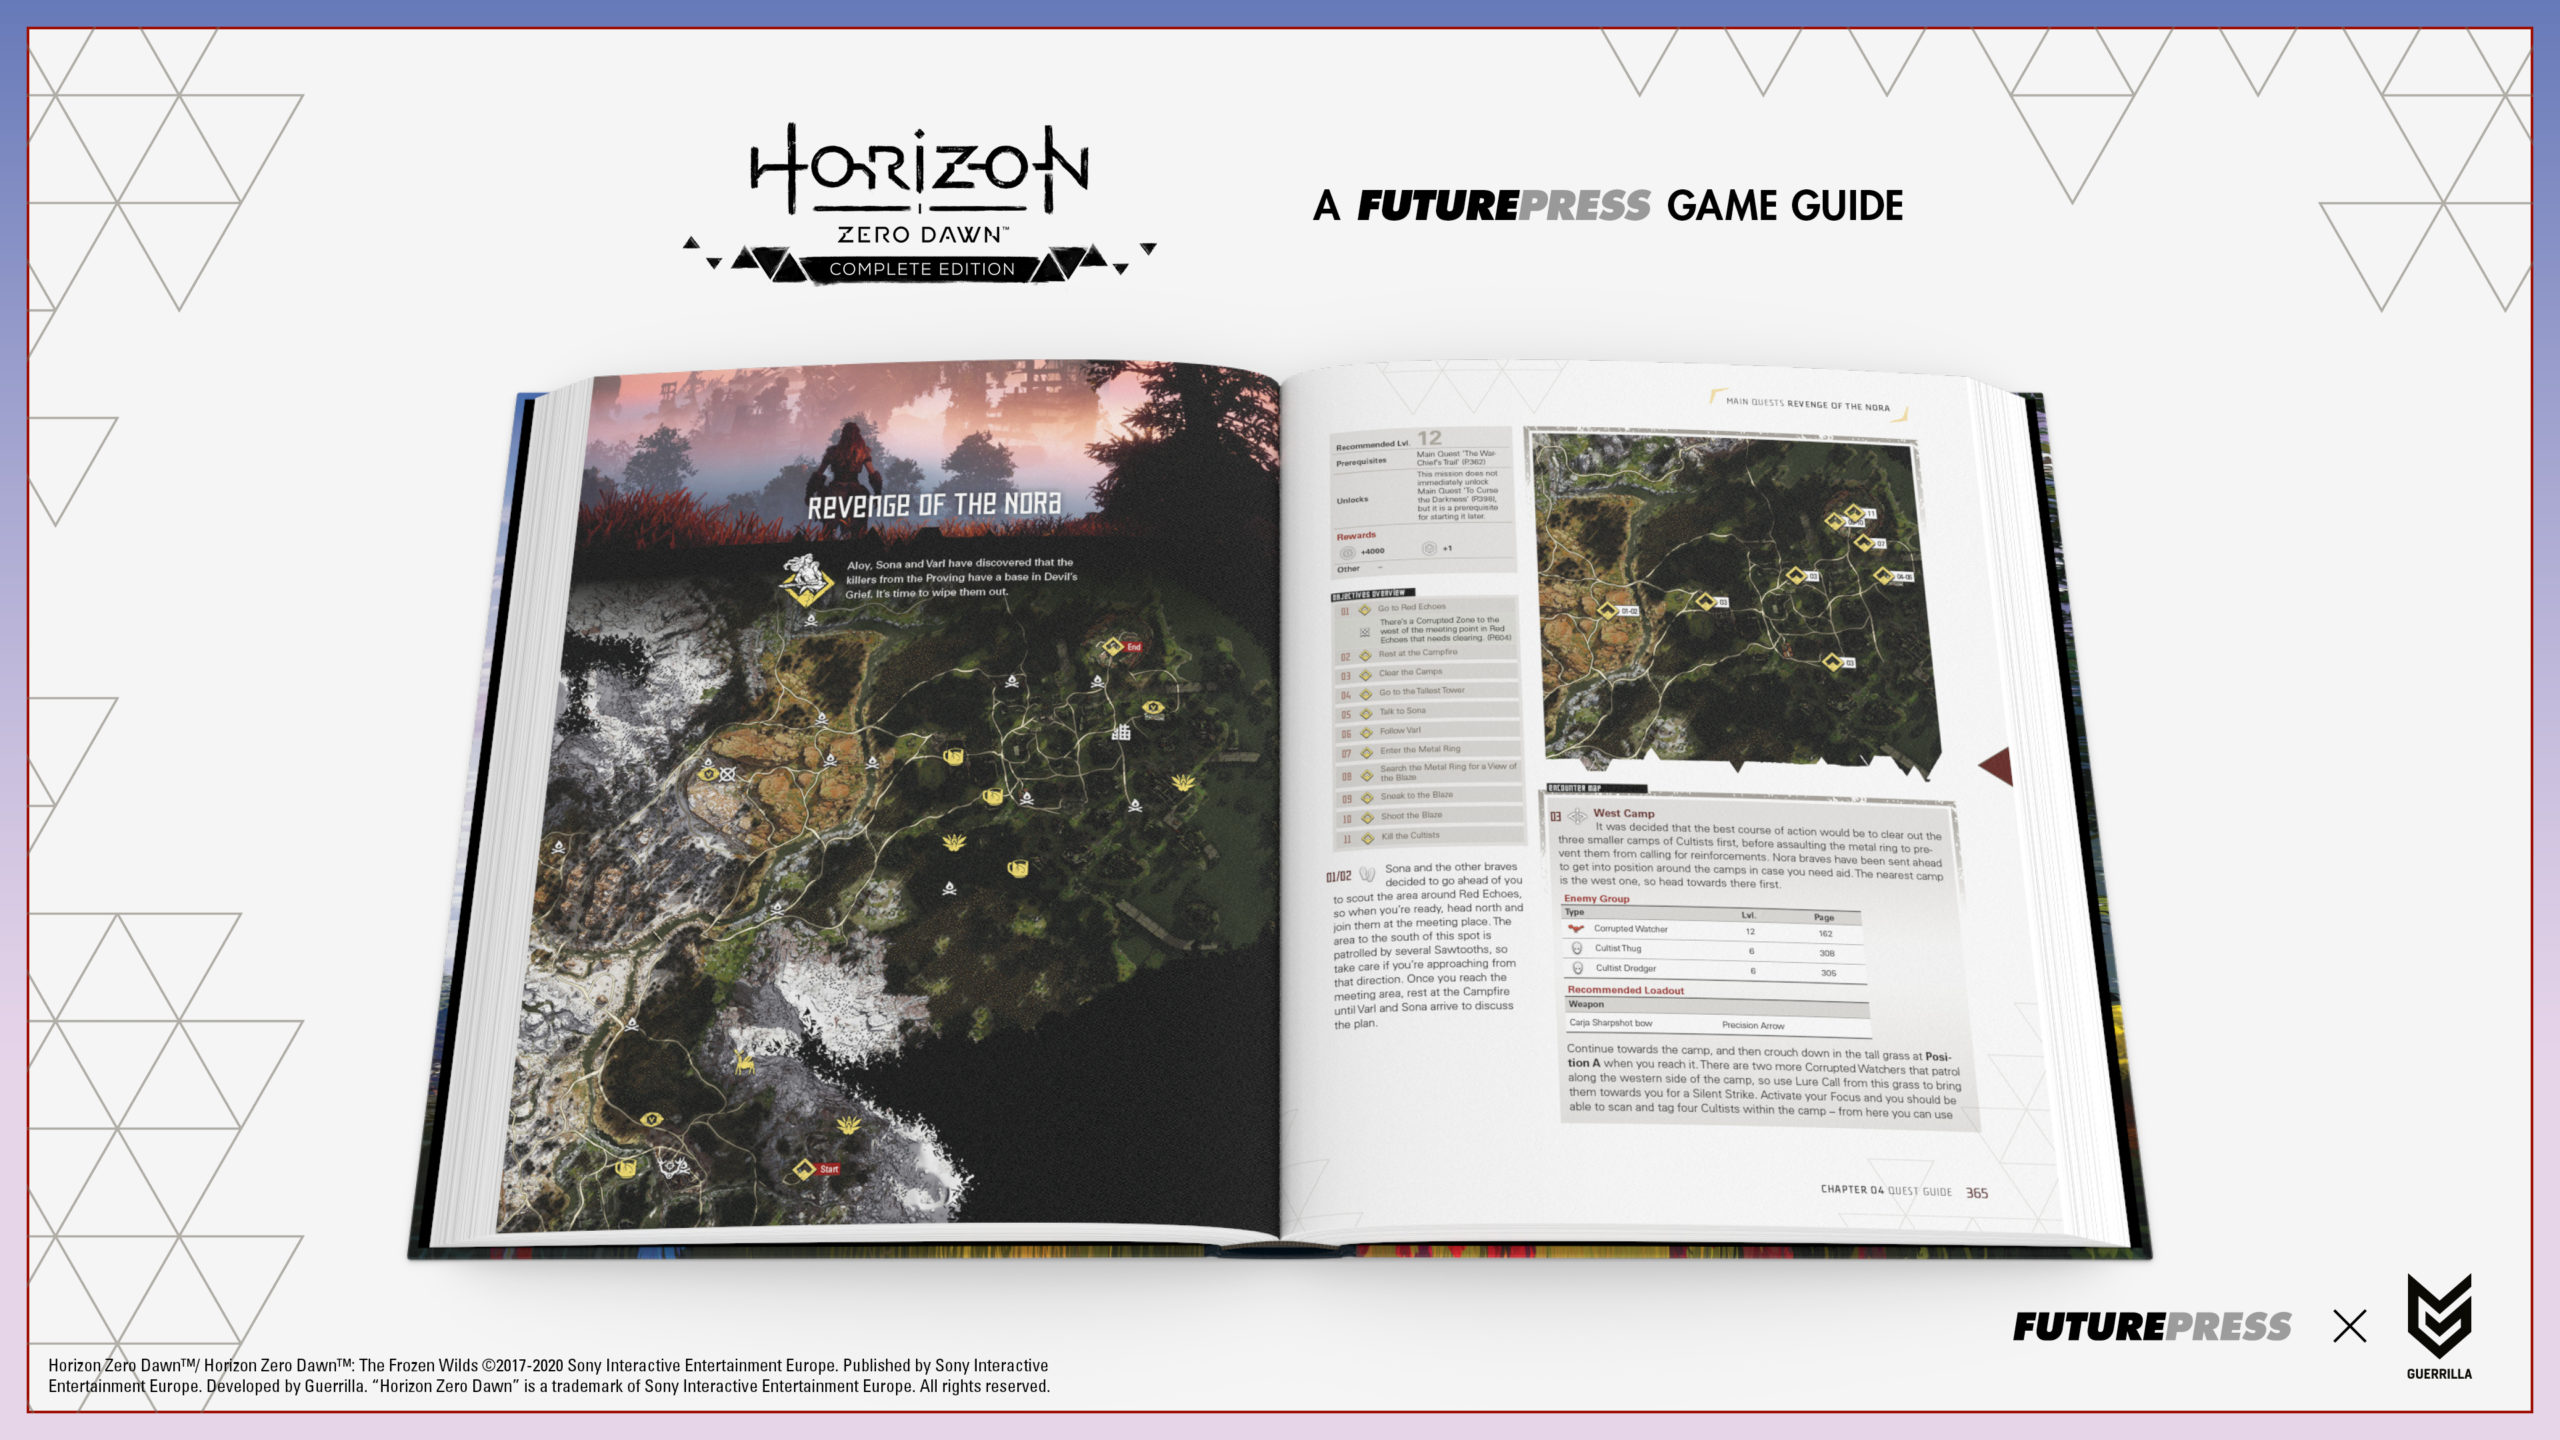 Horizon Zero Dawn: COMPLETE EDITION - PlayStation 4, PlayStation 4